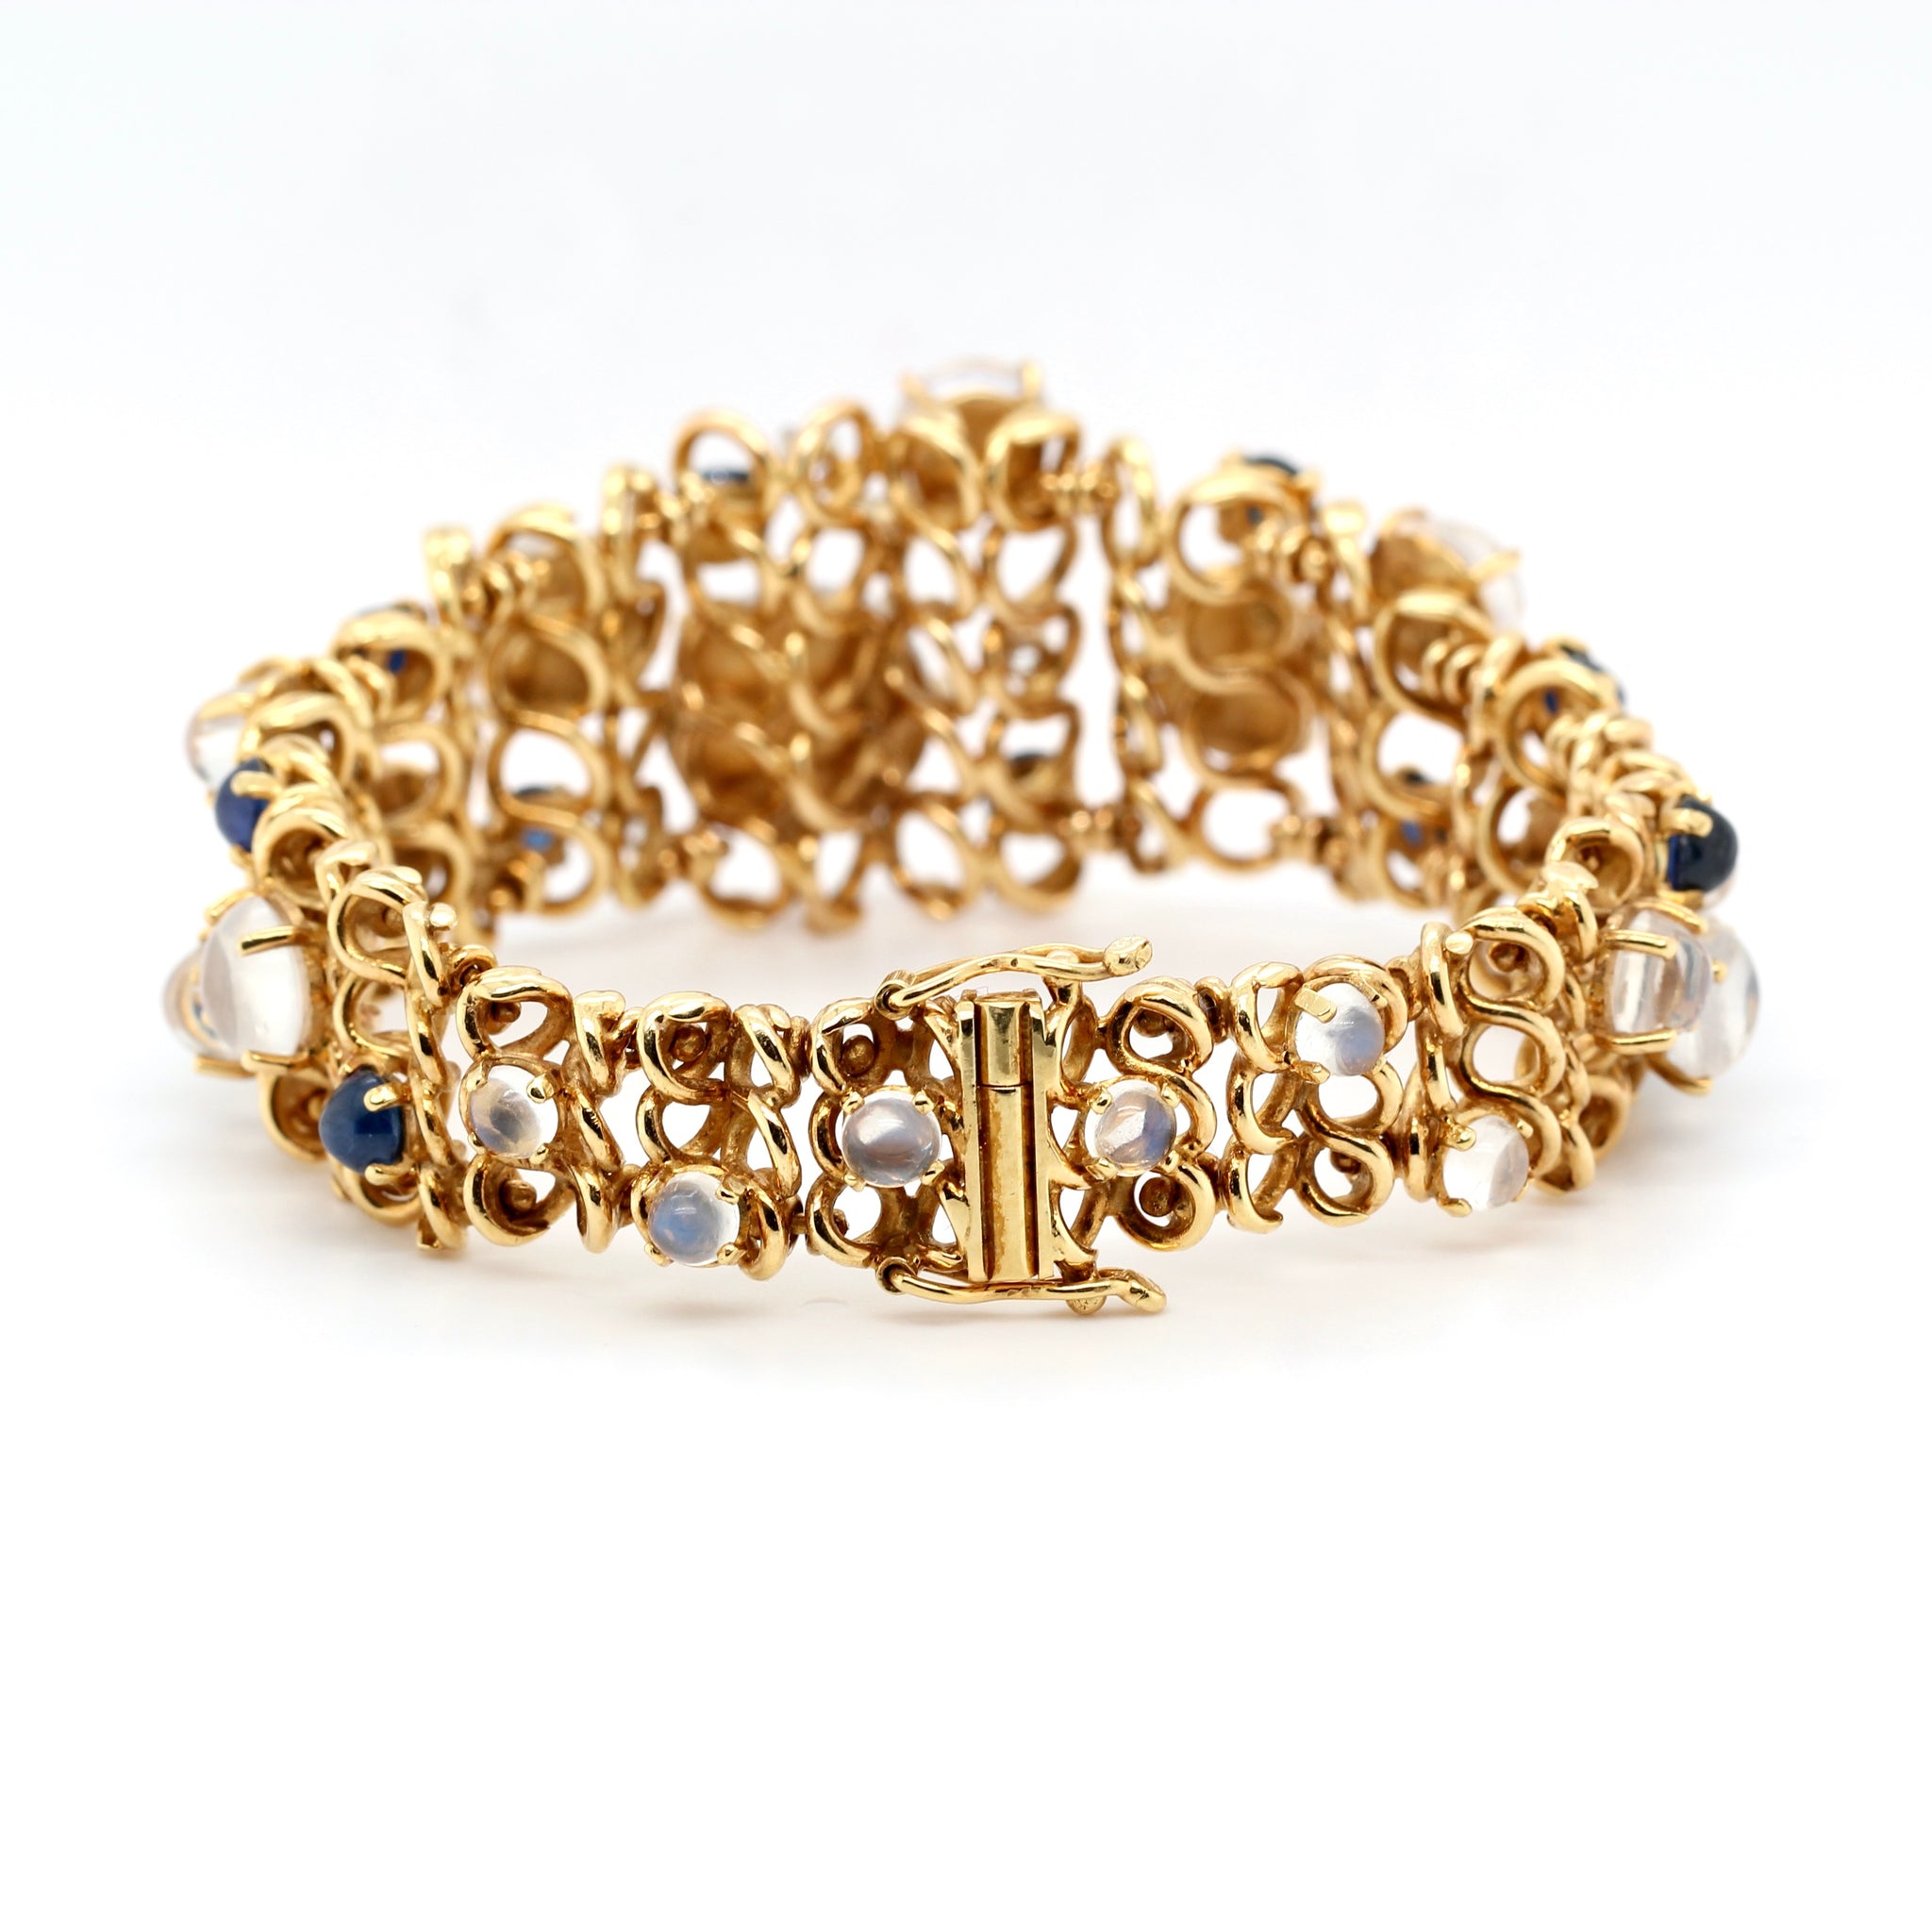 1970's Moonstone, Sapphire & Diamond Bracelet